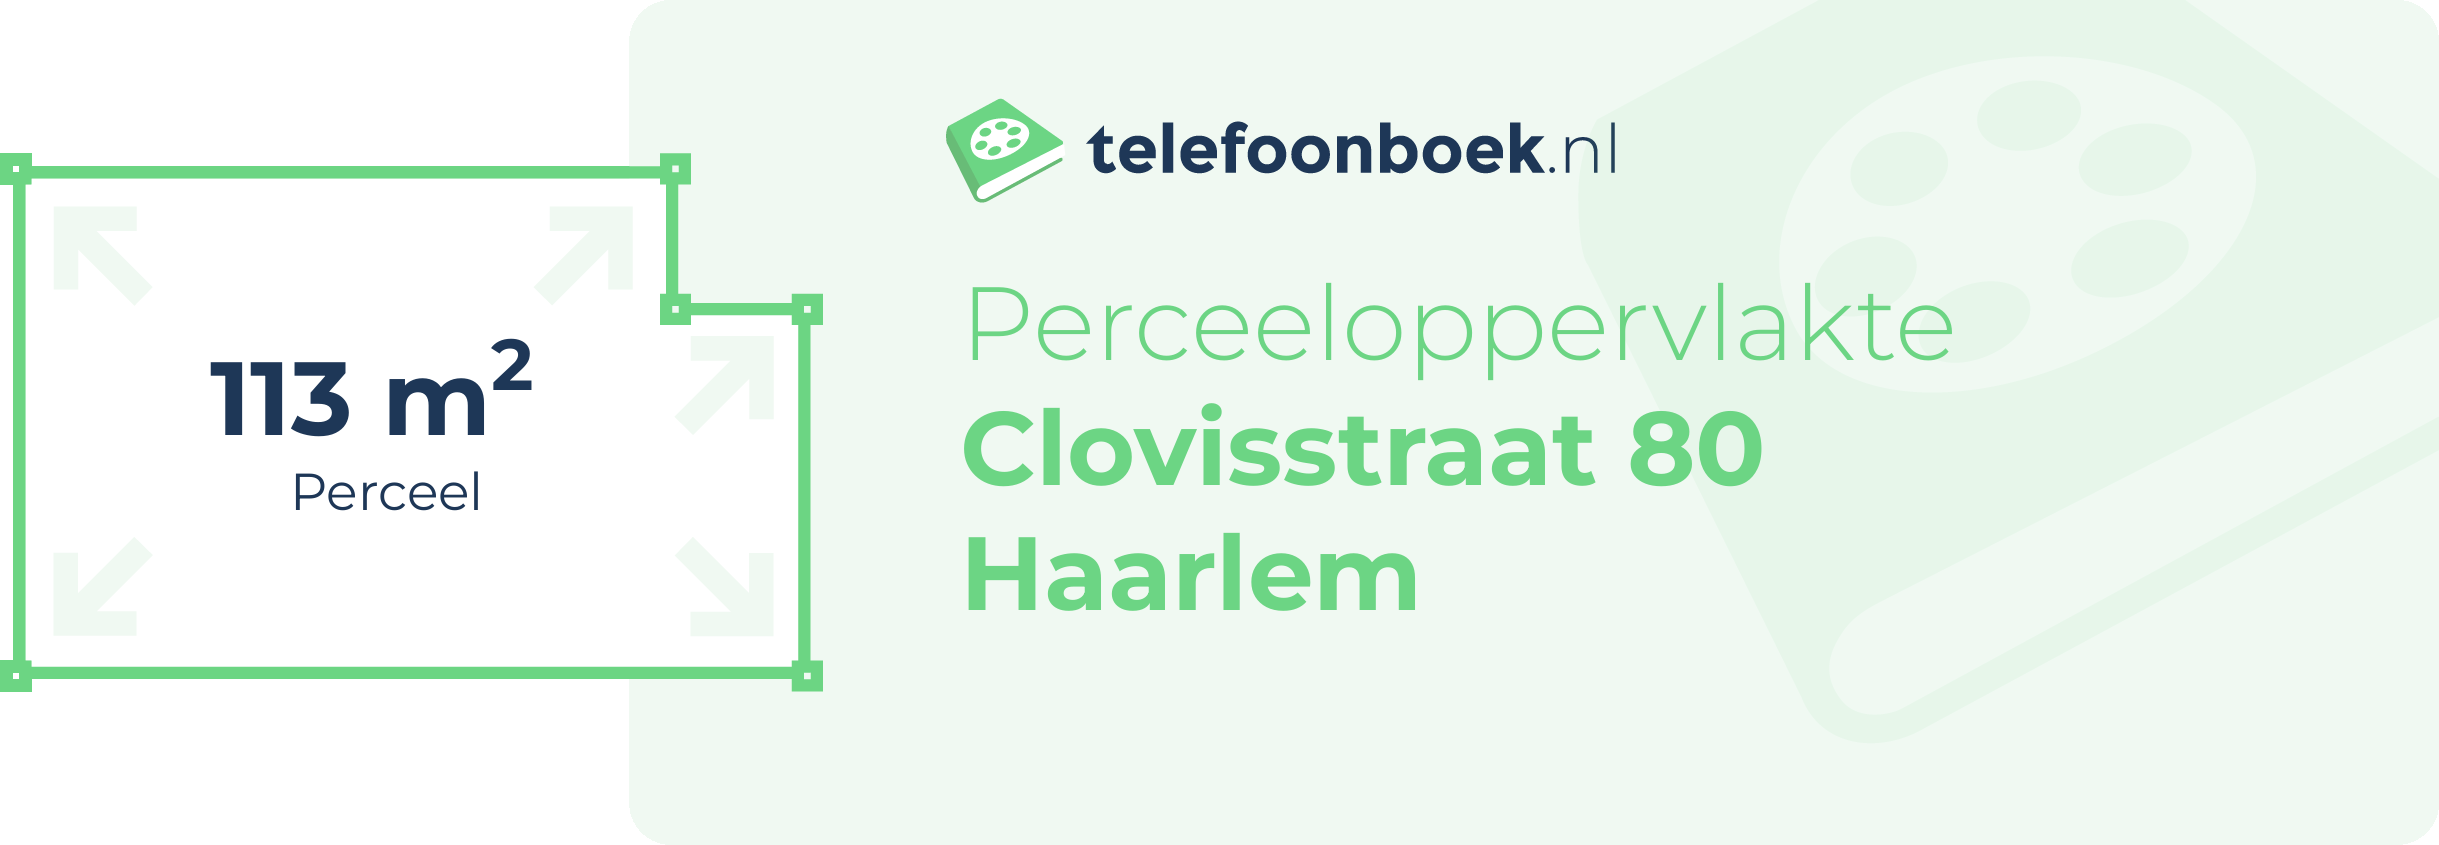 Perceeloppervlakte Clovisstraat 80 Haarlem